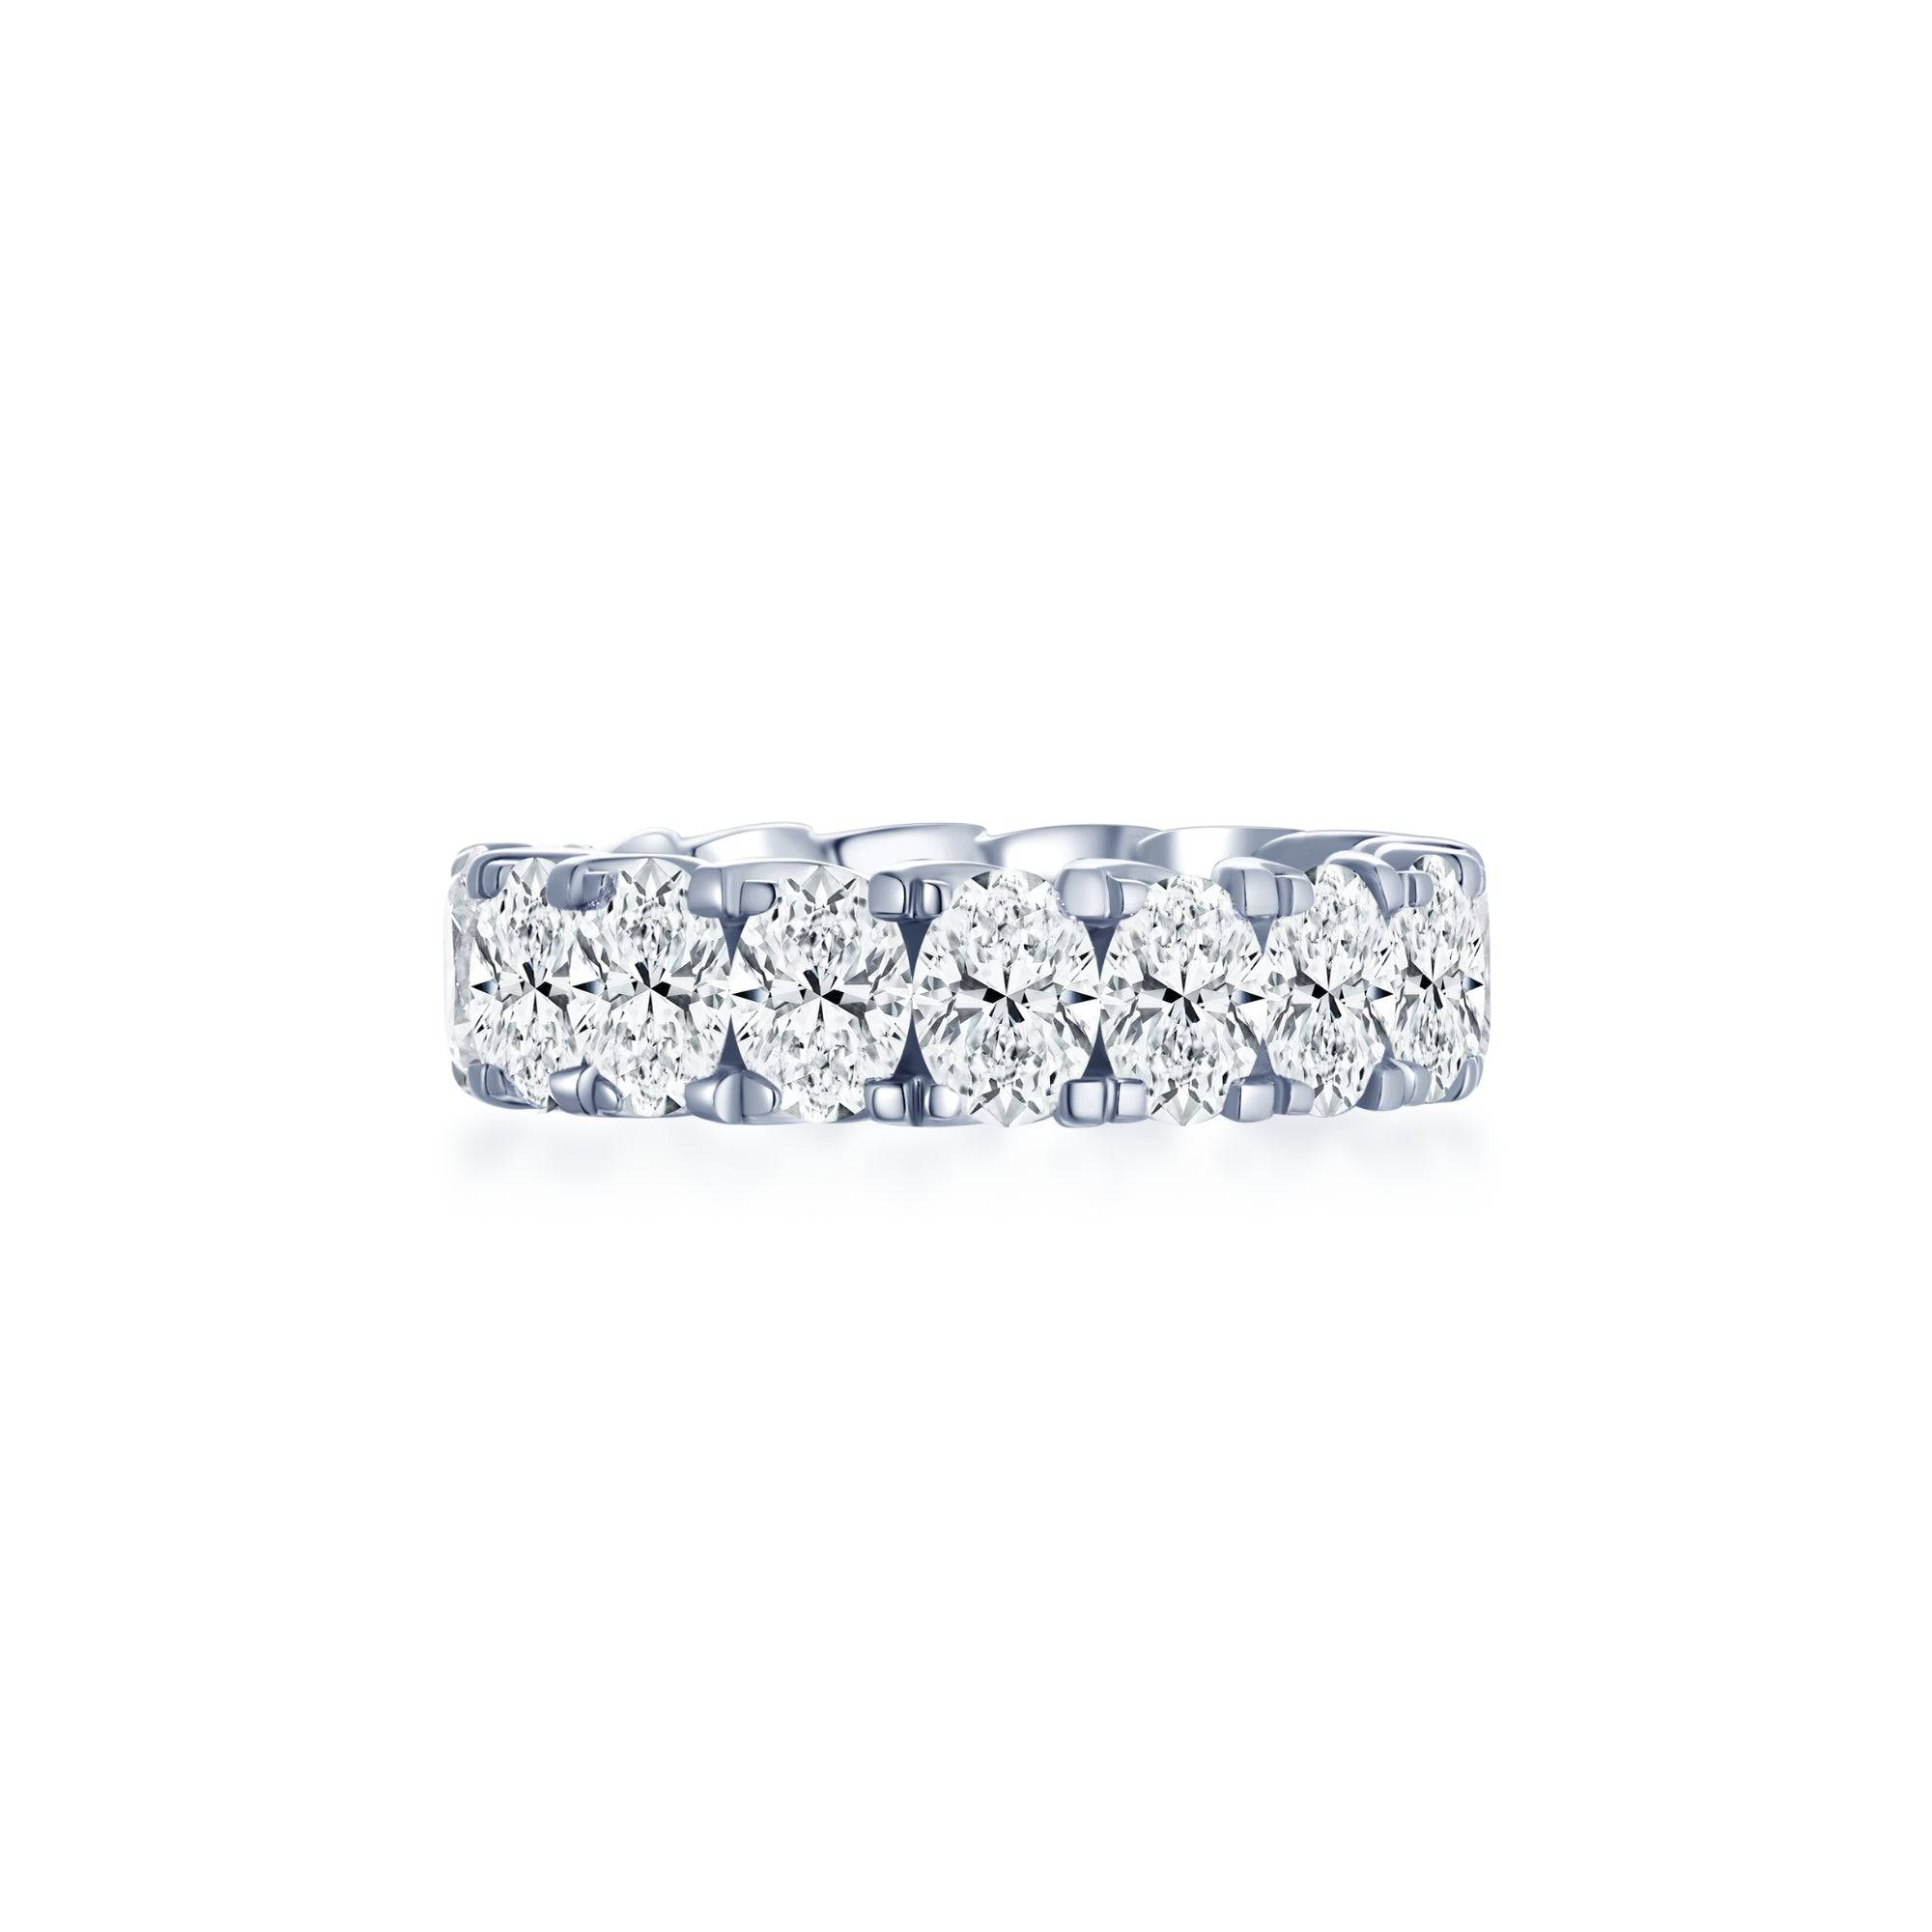 oval-shaped-diamond-eternity-ring-gia-certificate-dro2739-45170989400228.jpg